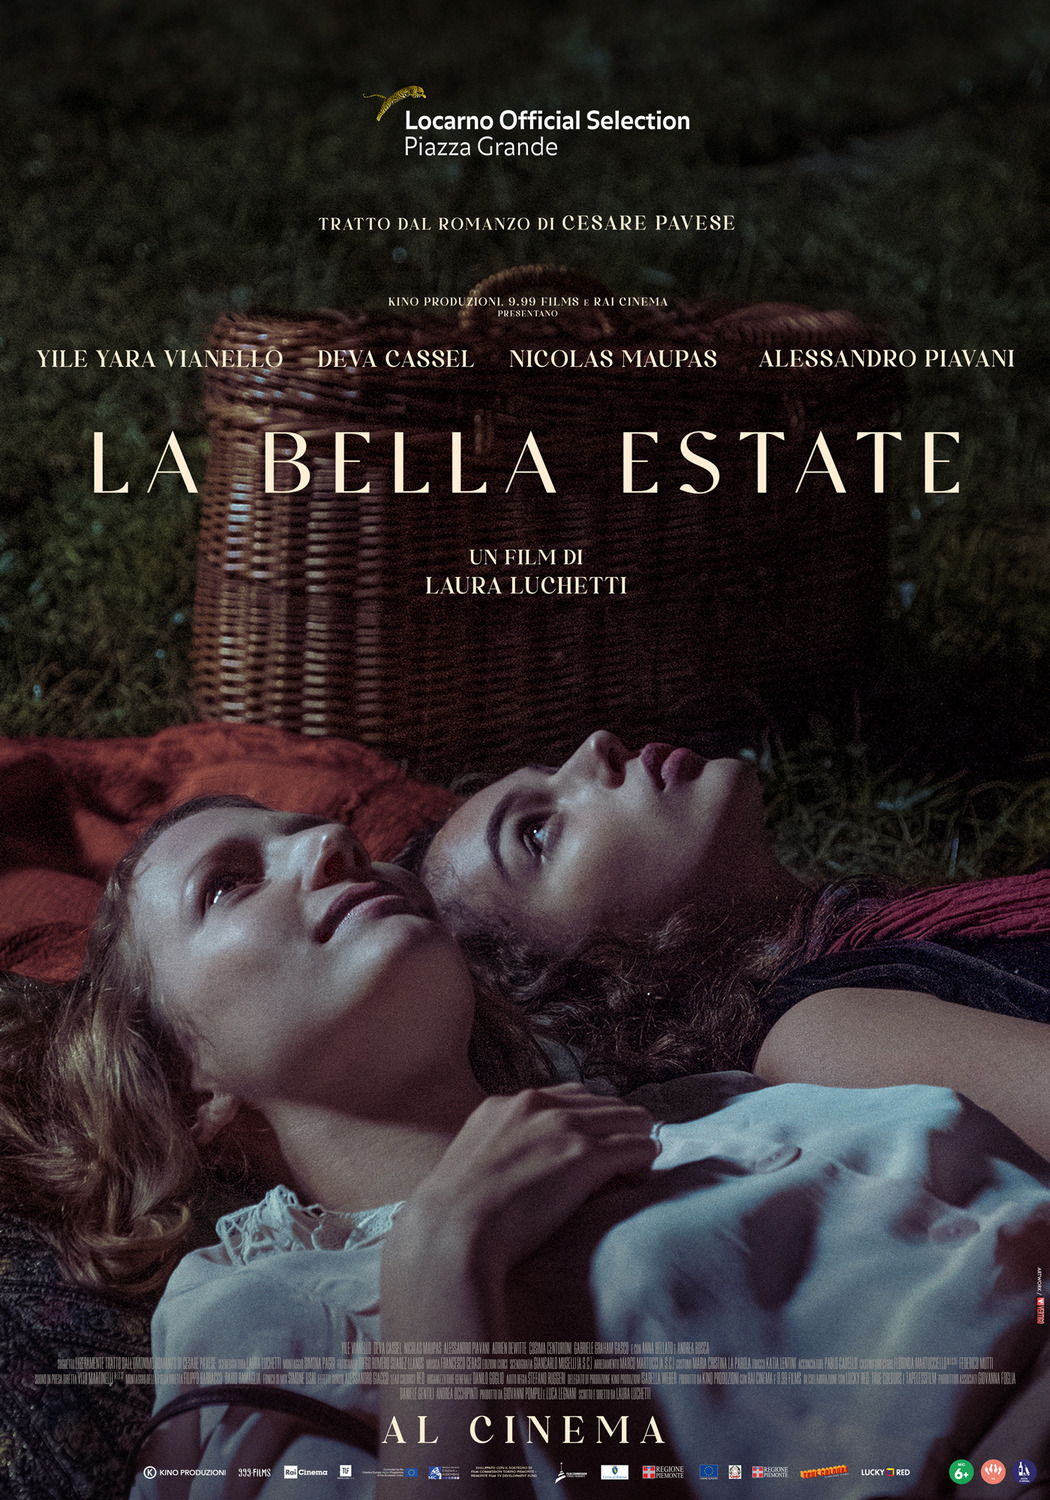 Extra Large Movie Poster Image for La bella estate (#2 of 2)